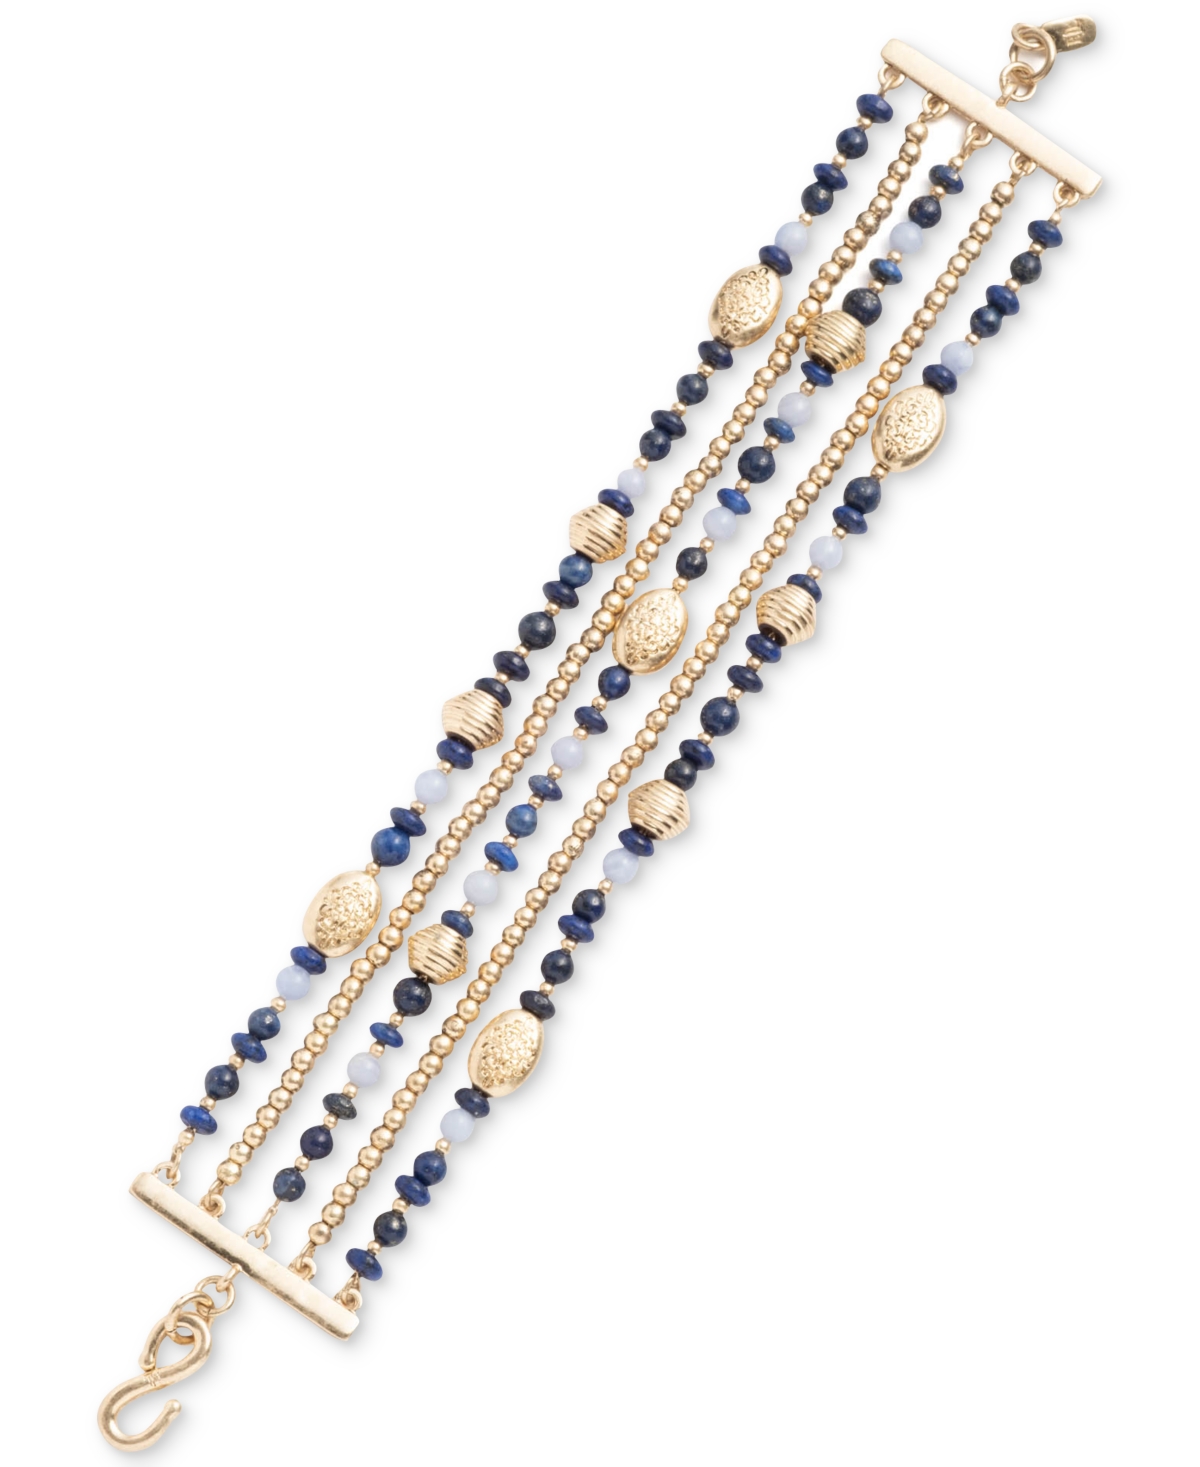 Gold-Tone Natural Stone Beaded Multi-Row Flex Bracelet - Blue